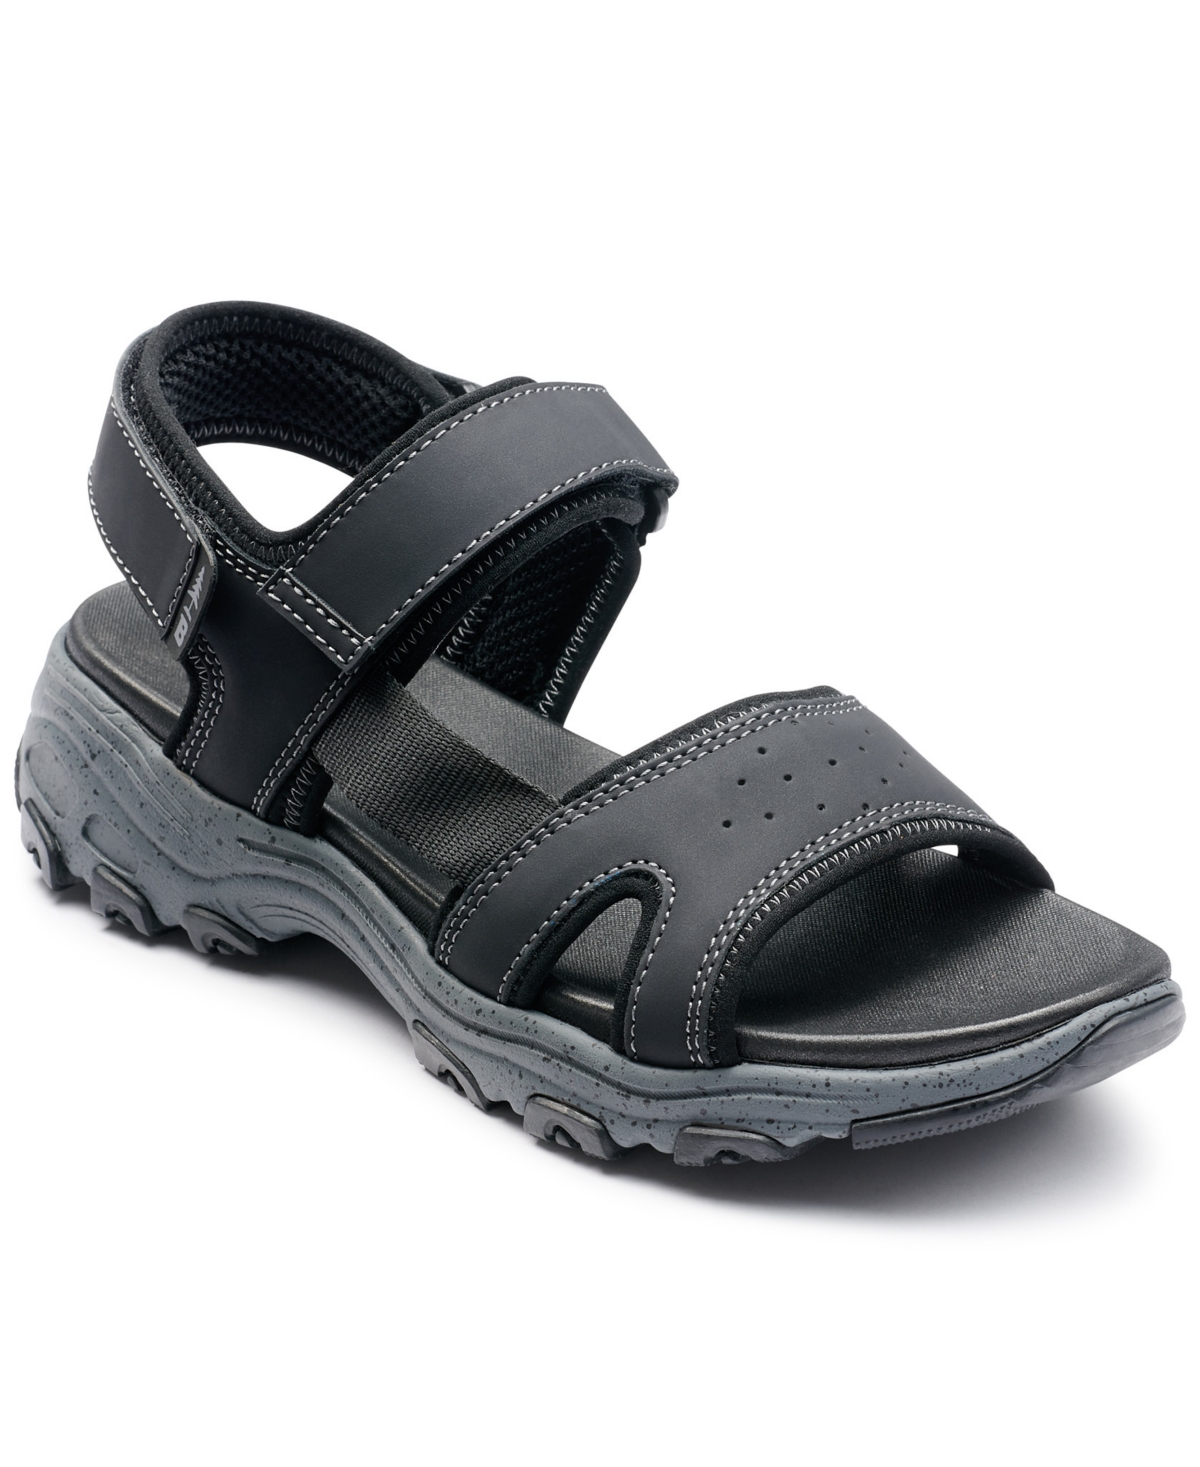 Men's Trail Outdoor Sandals - Black